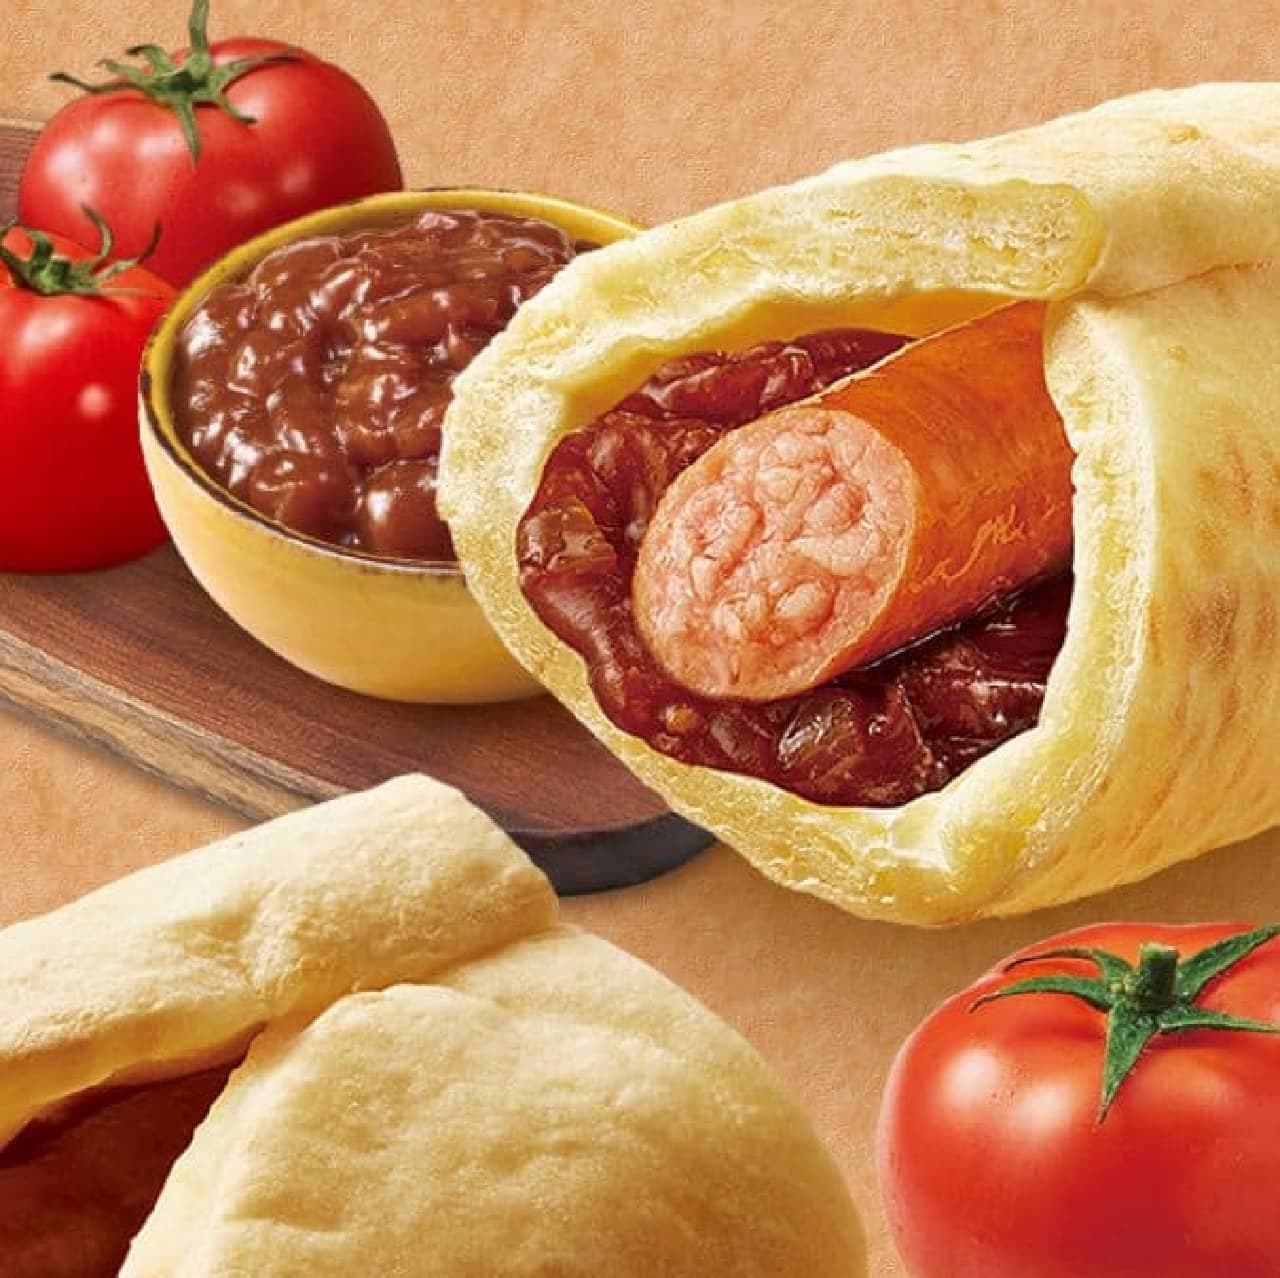 FamilyMart "Pizza Sandwich - Crispy! Juicy! Sausage & BBQ Sauce".